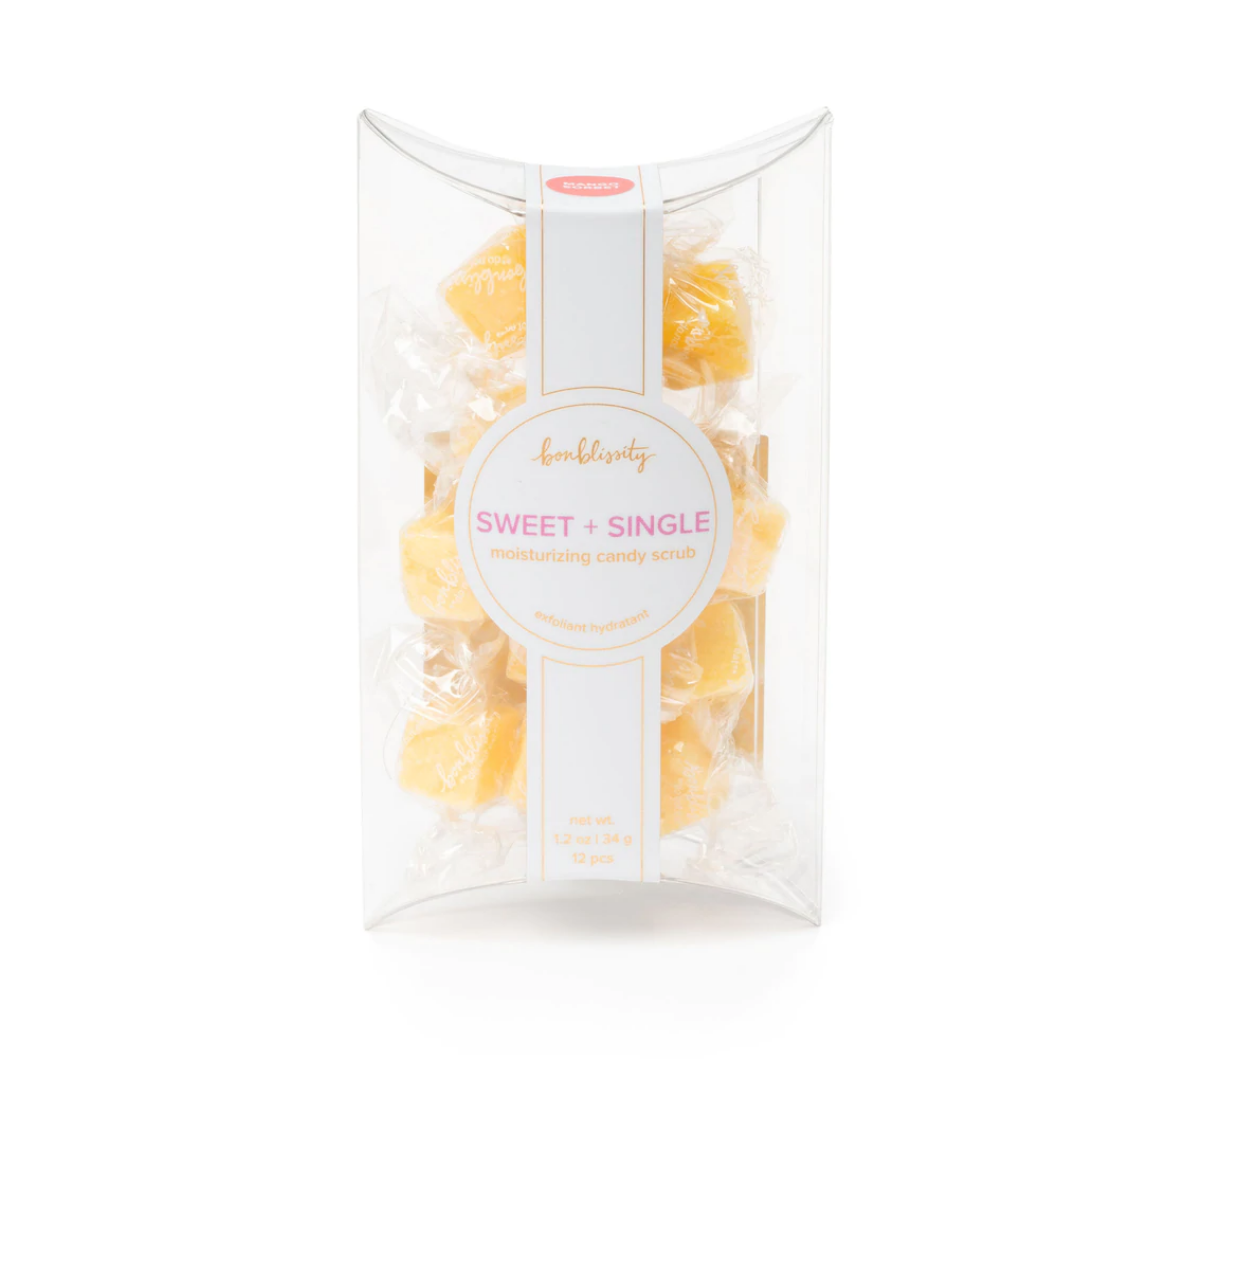 Sweet + Single Candy Scrub - Mango Sorbet Gifts Bonblissity   